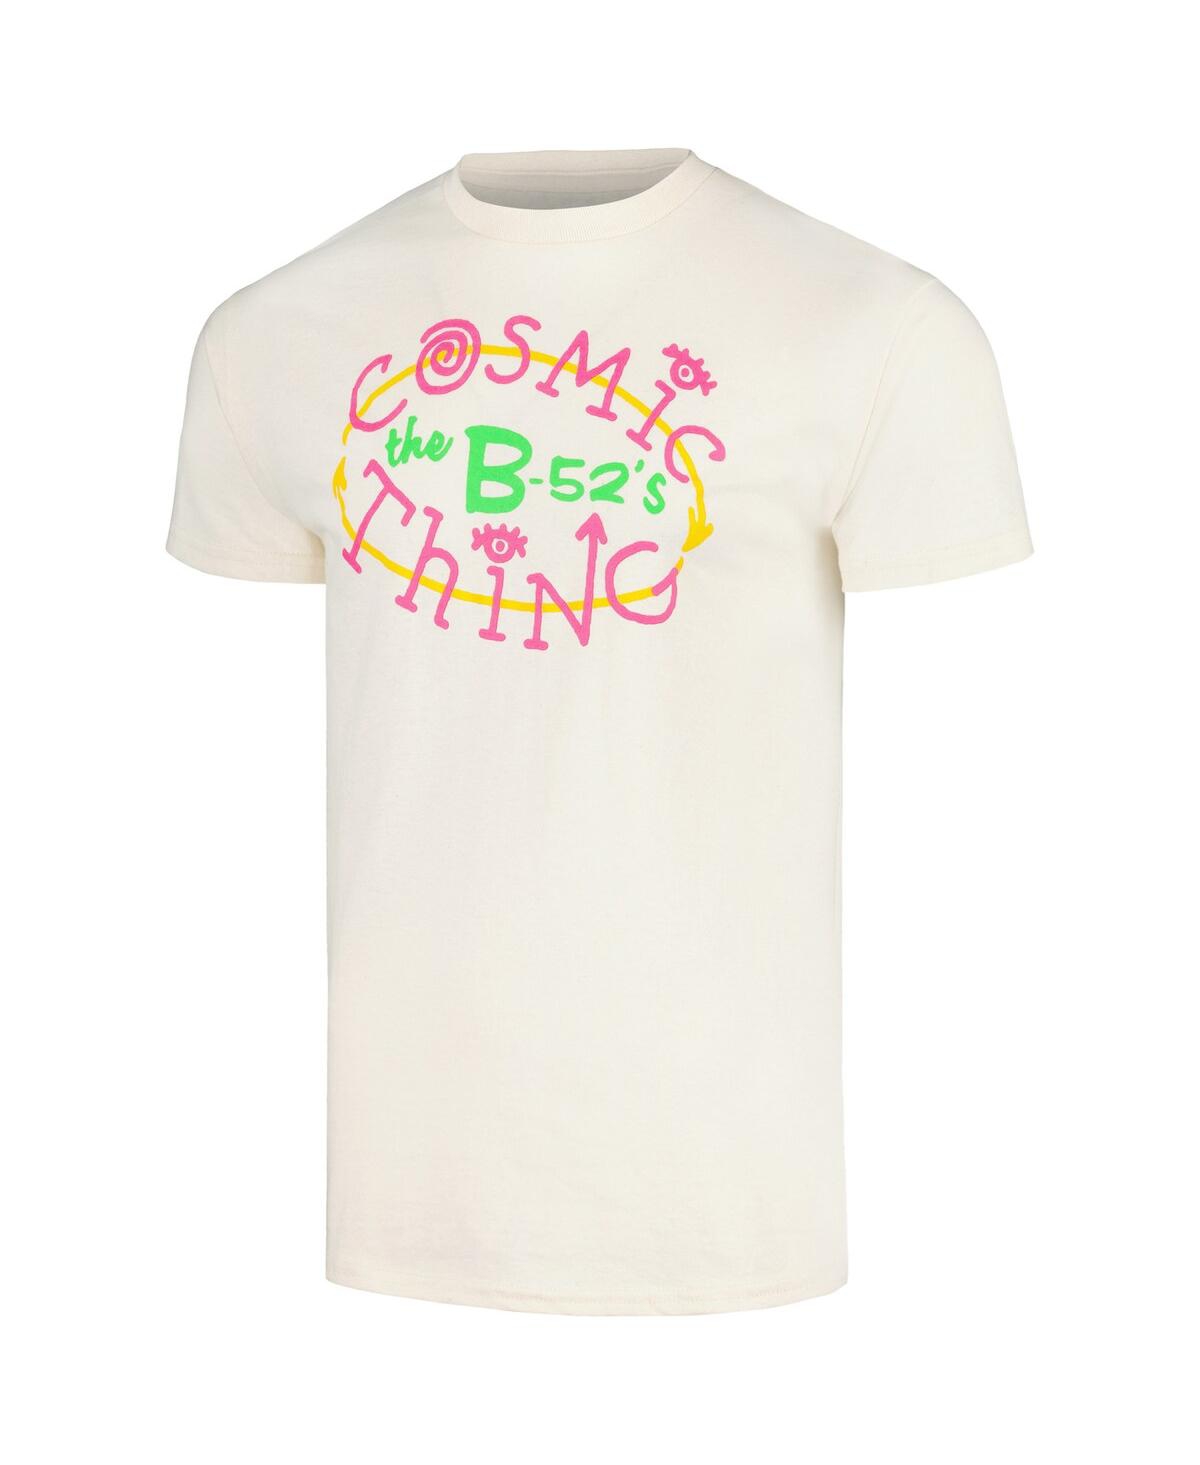 Shop Manhead Merch Men's  Cream The B-52's Cosmic Thing Graphic T-shirt